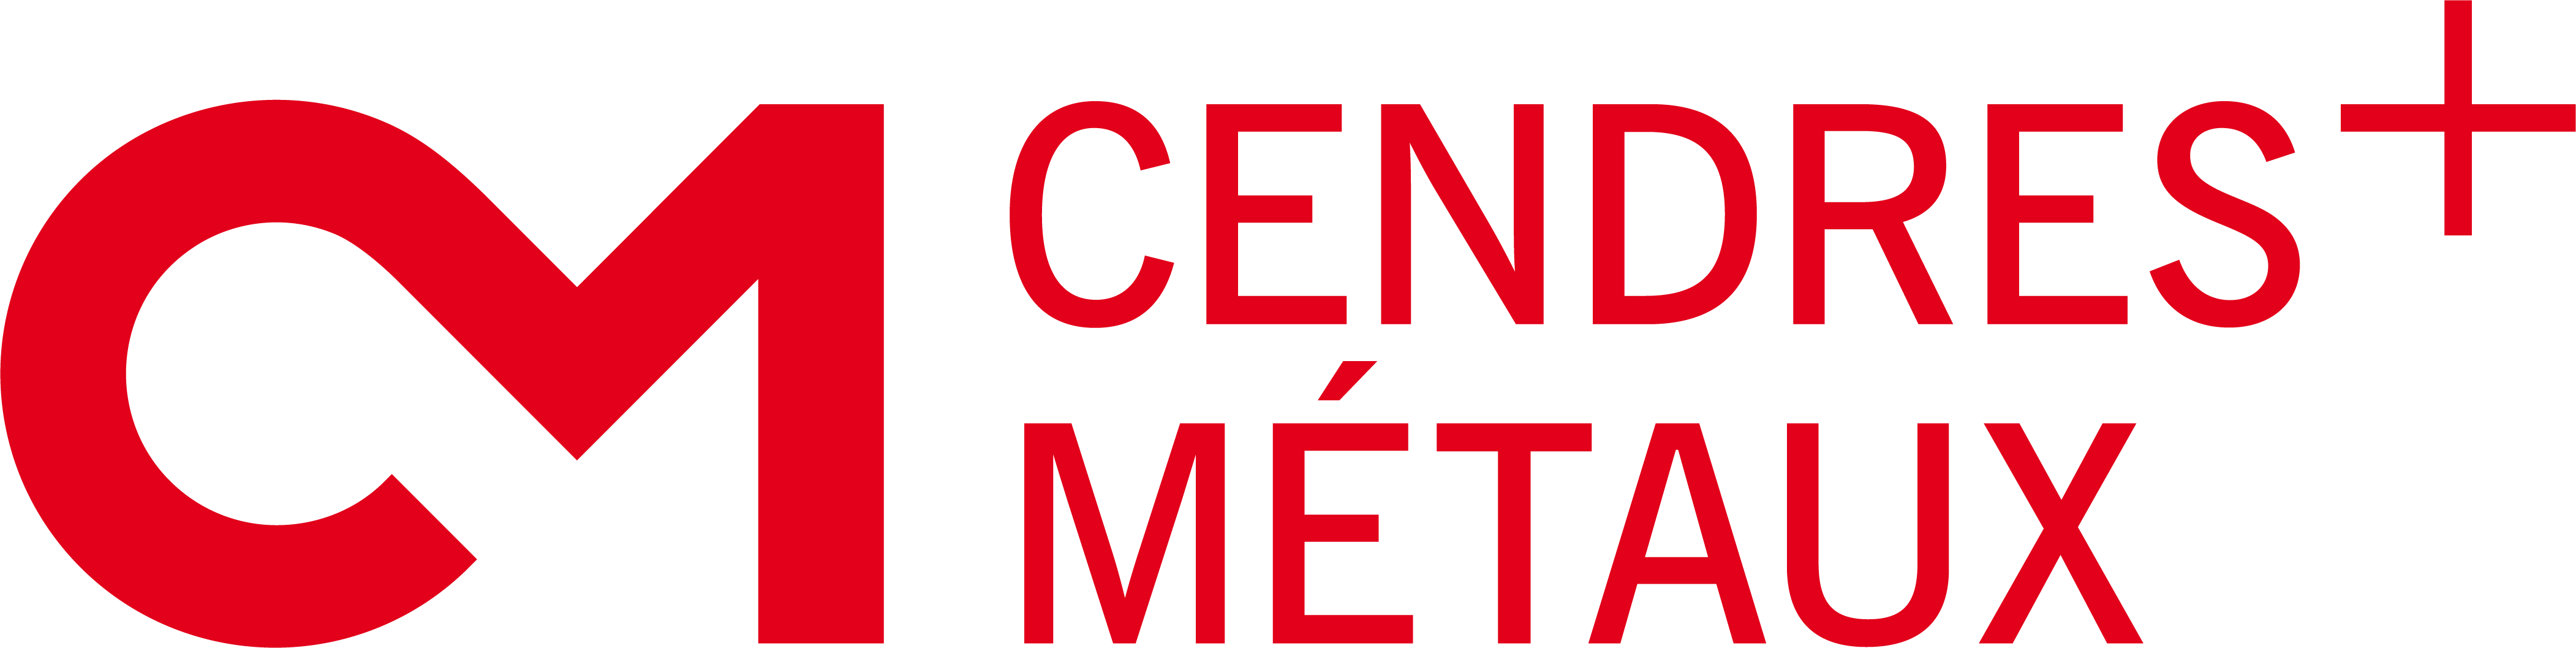 Cendres Metaux logo